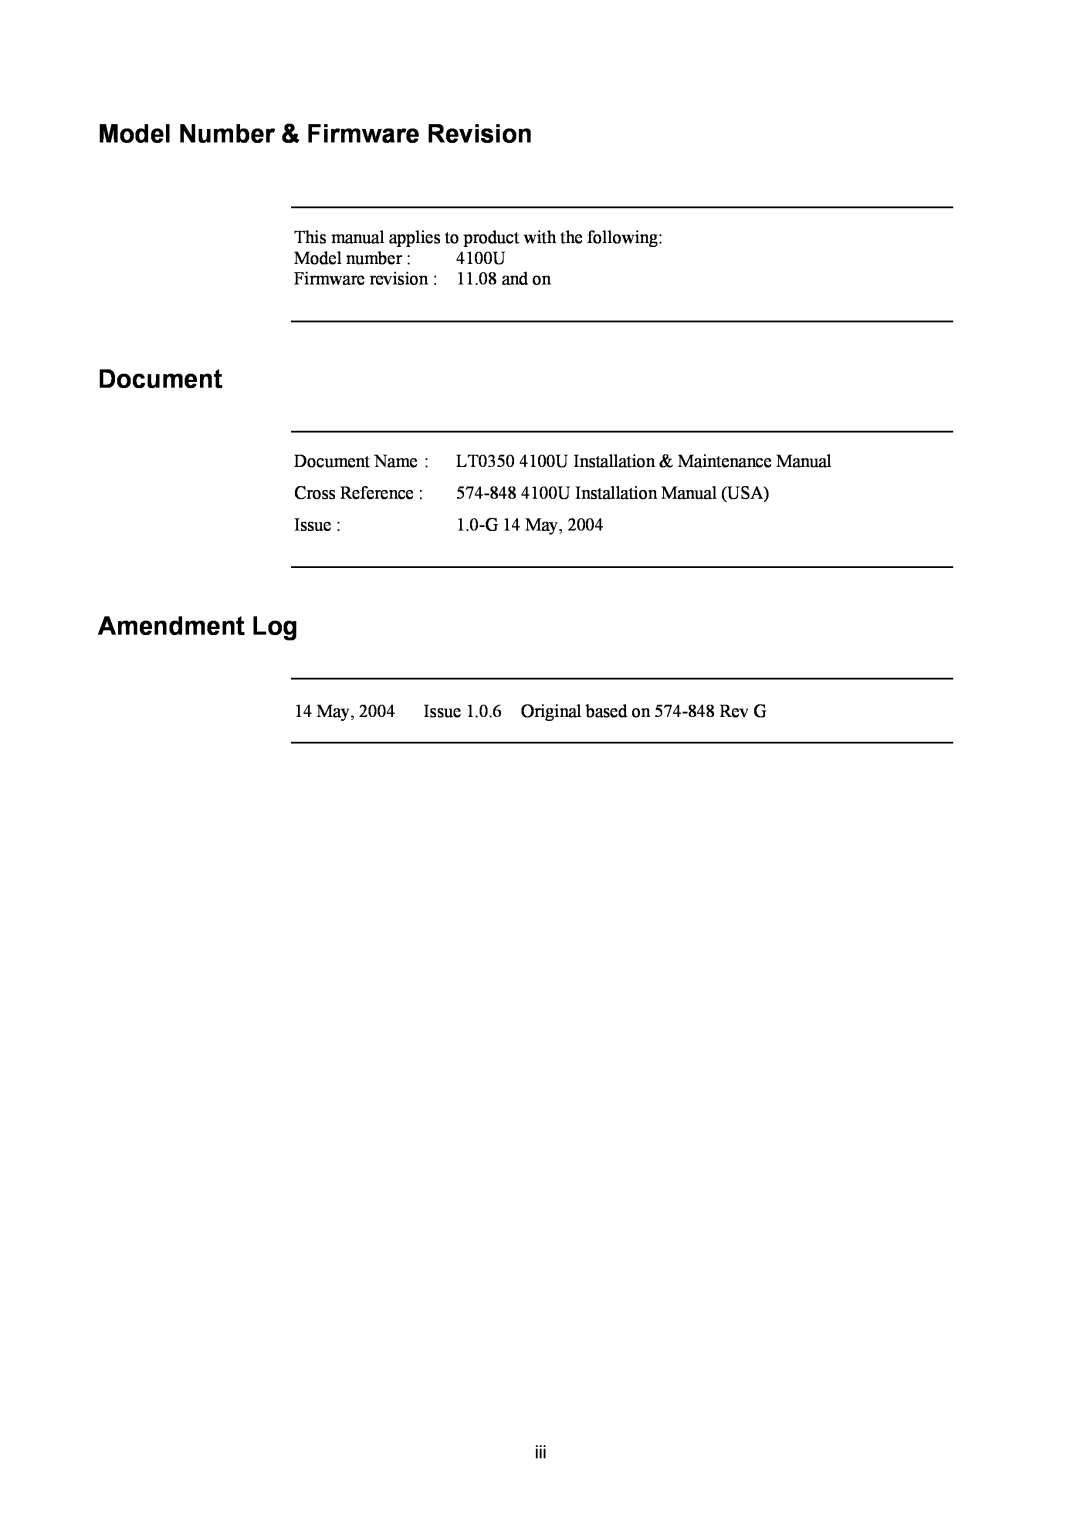 Tyco 4100U installation manual Model Number & Firmware Revision, Document, Amendment Log 